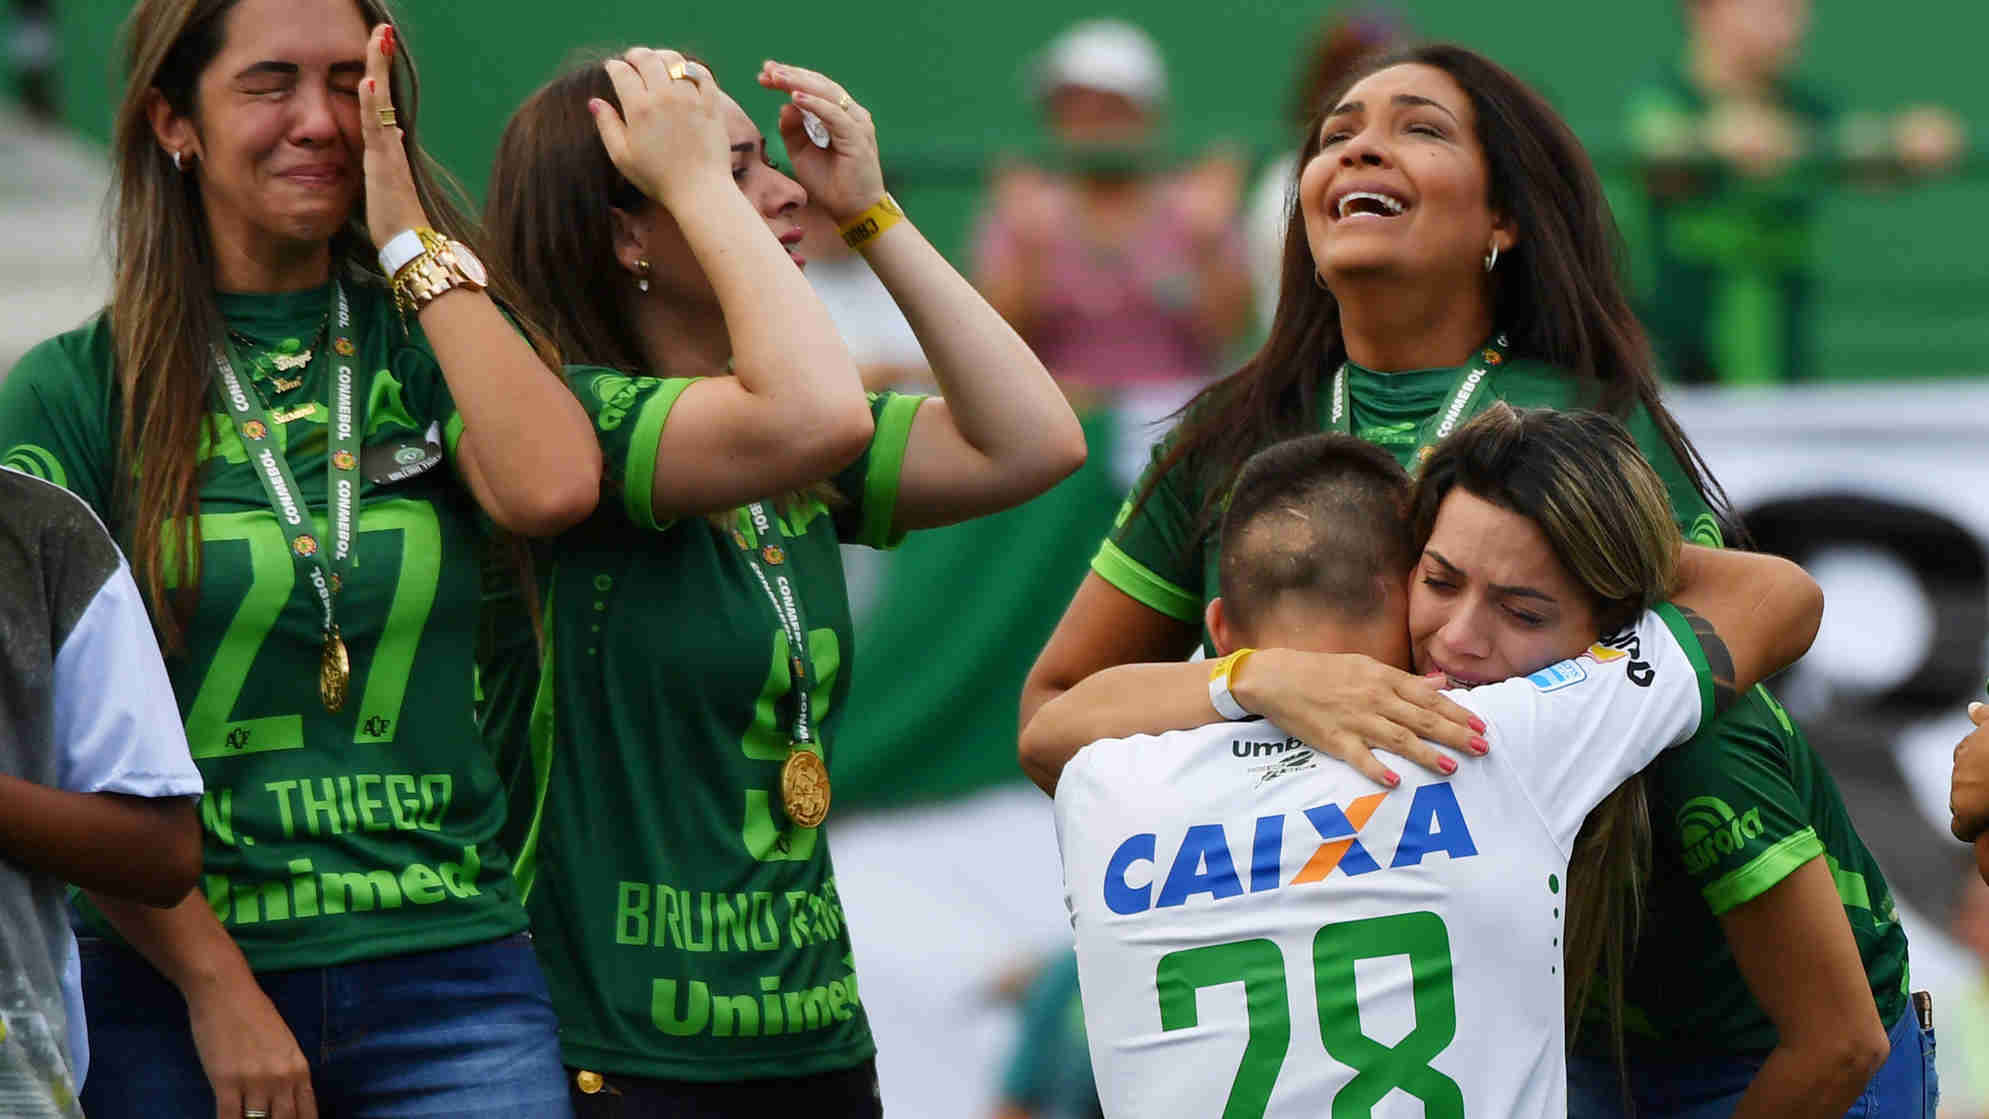 Brazil's Chapecoense plays first game after plane crash tragedy - CGTN